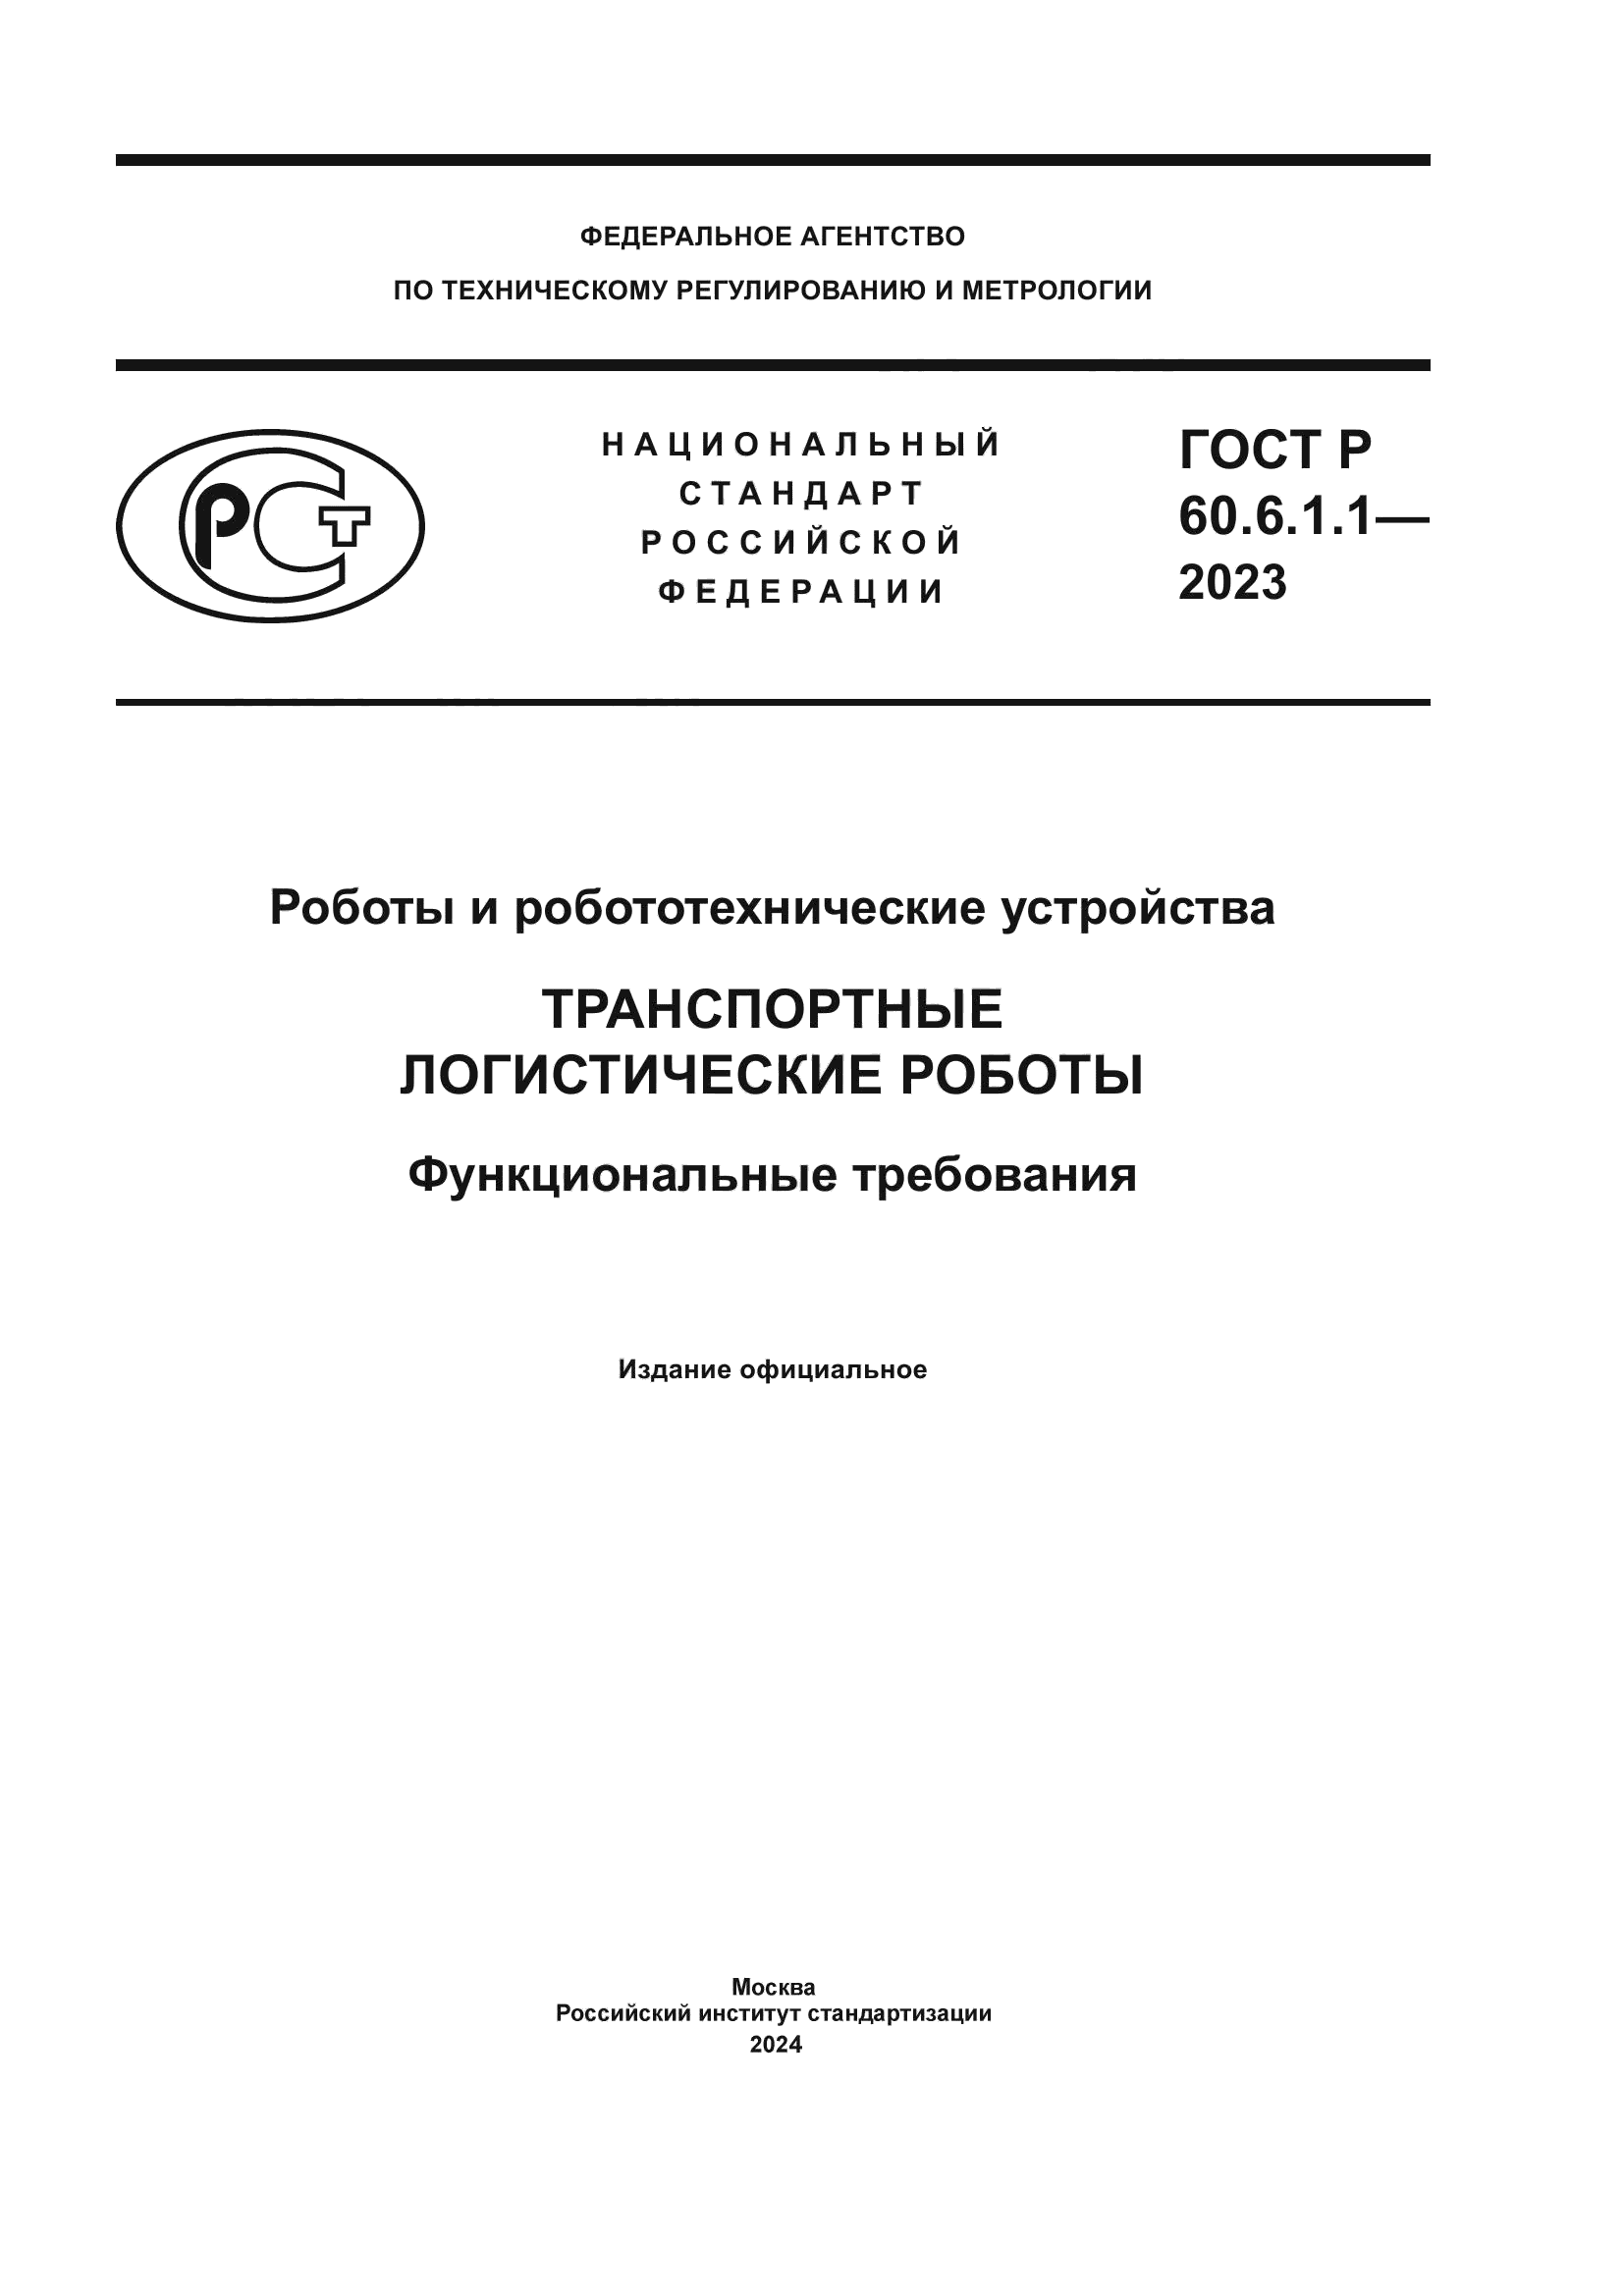 ГОСТ Р 60.6.1.1-2023